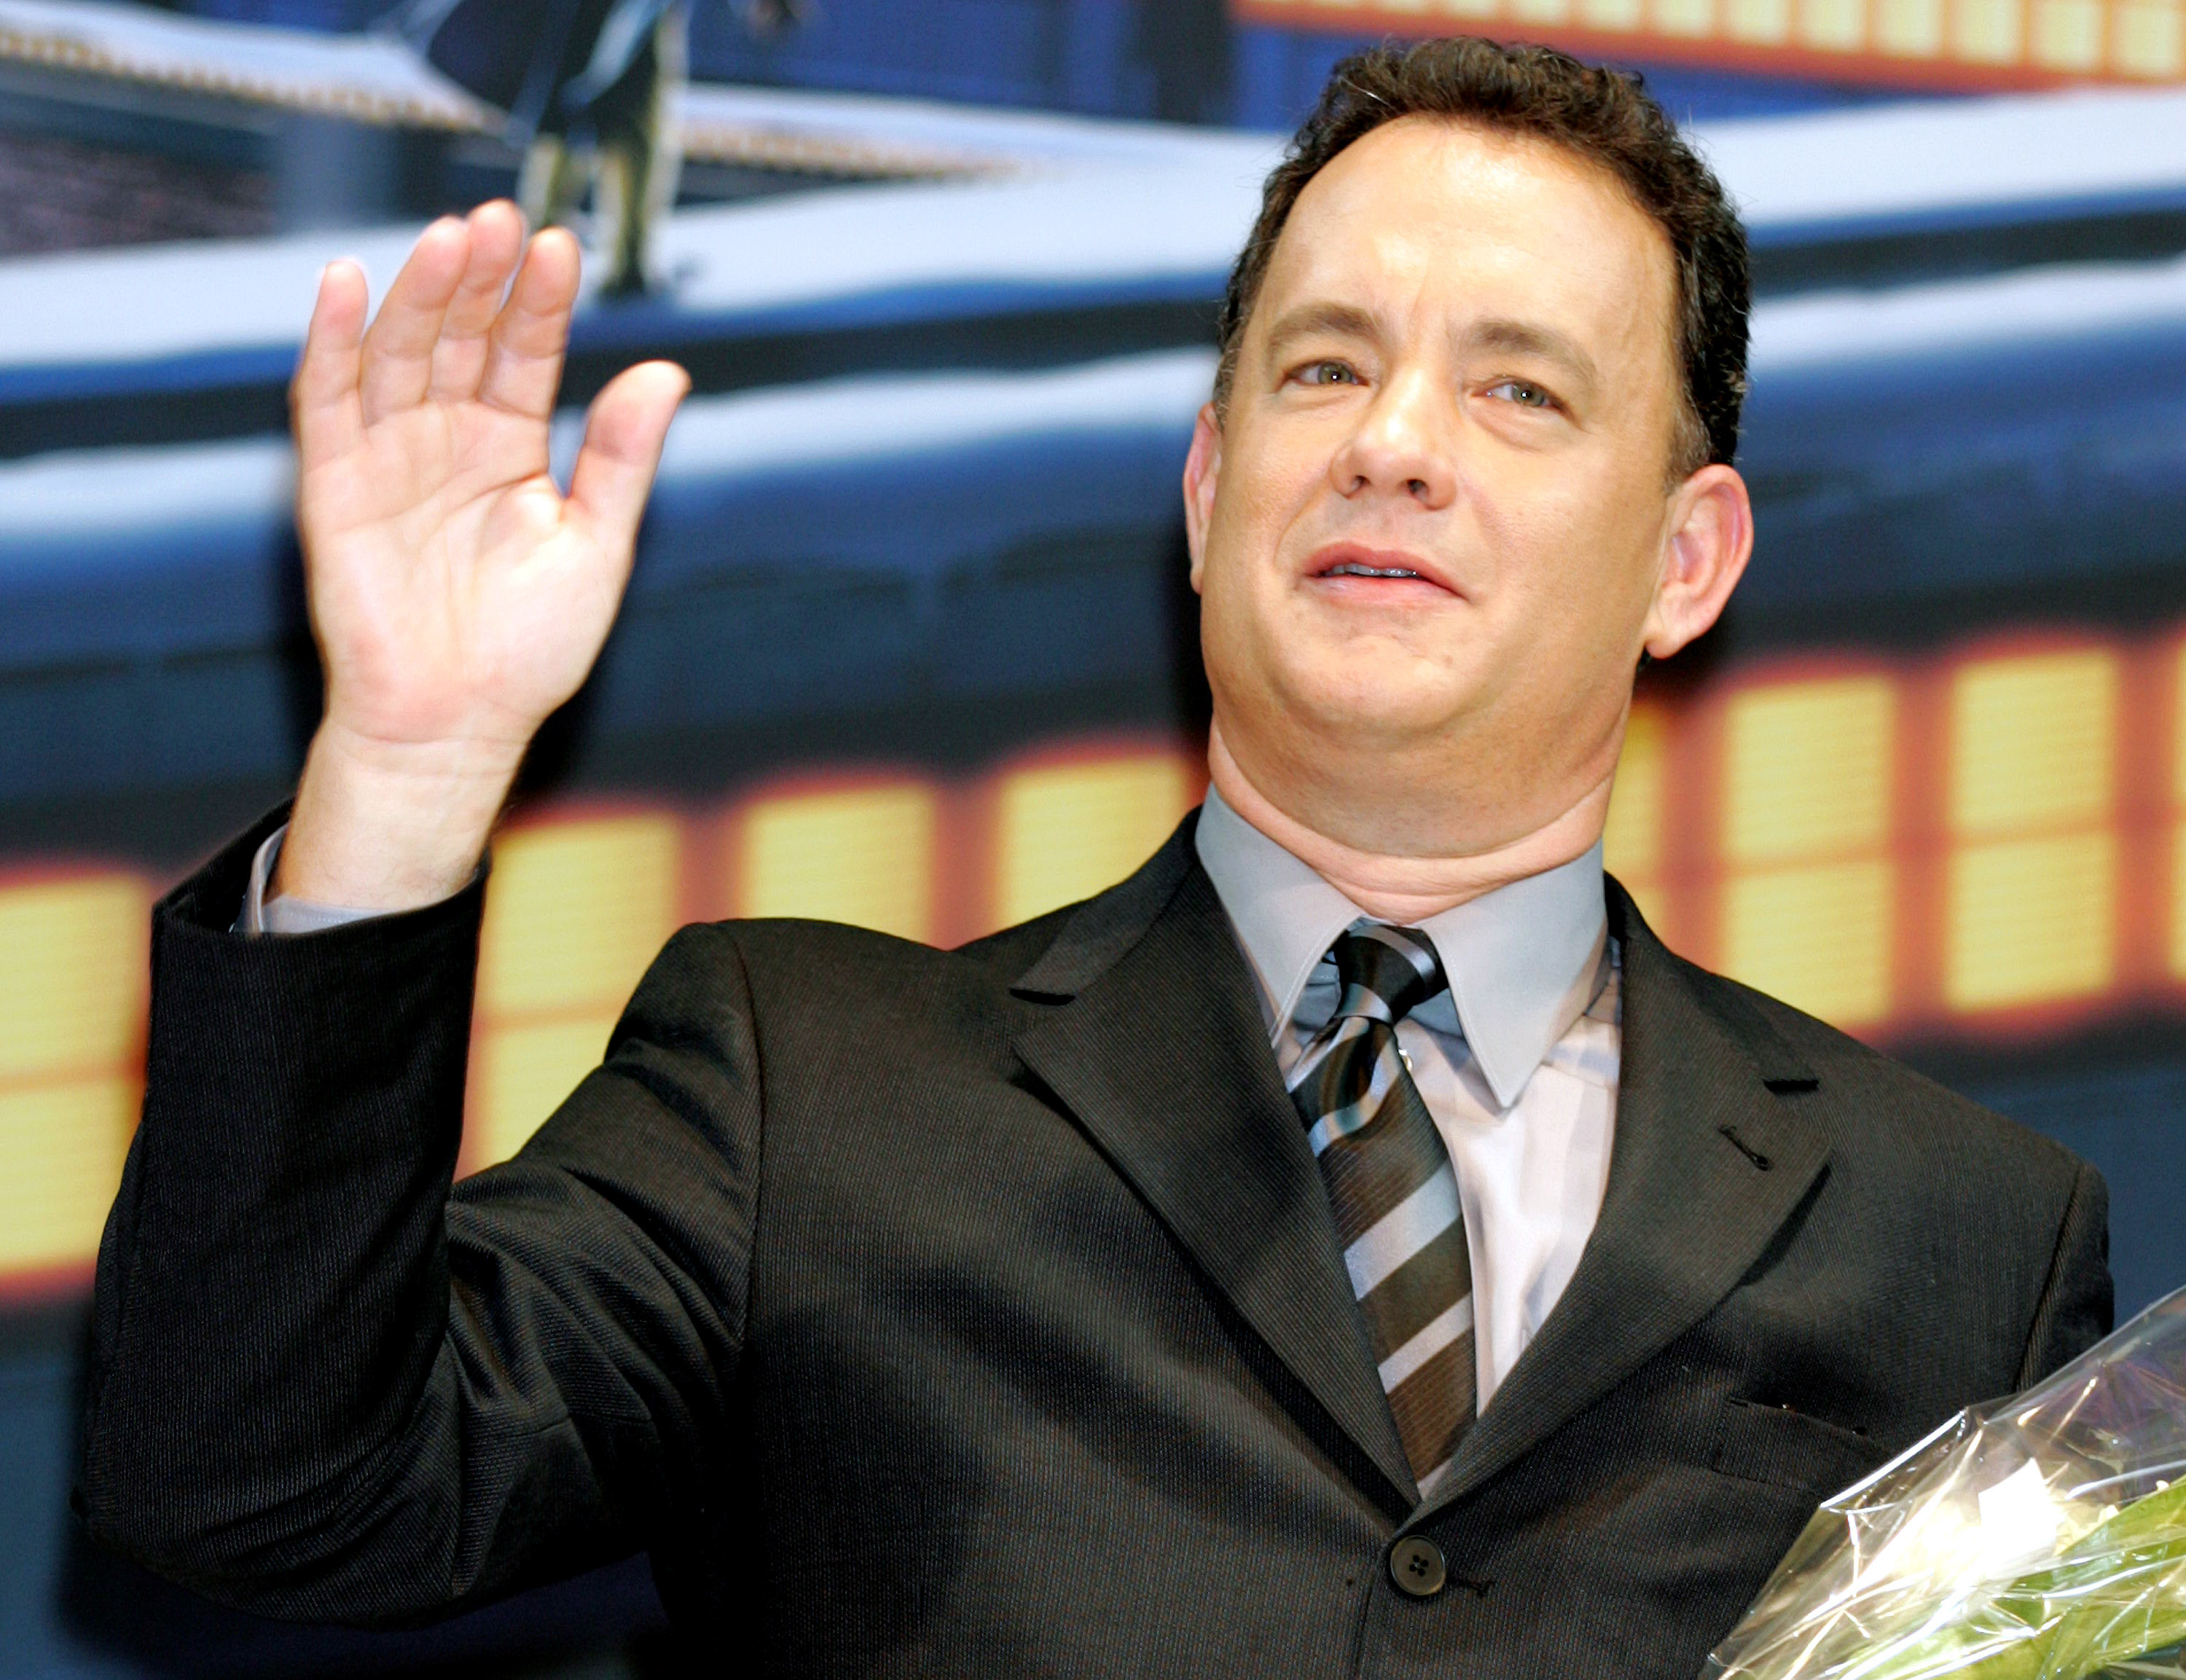 Polar Express star Tom Hanks raises his right hand